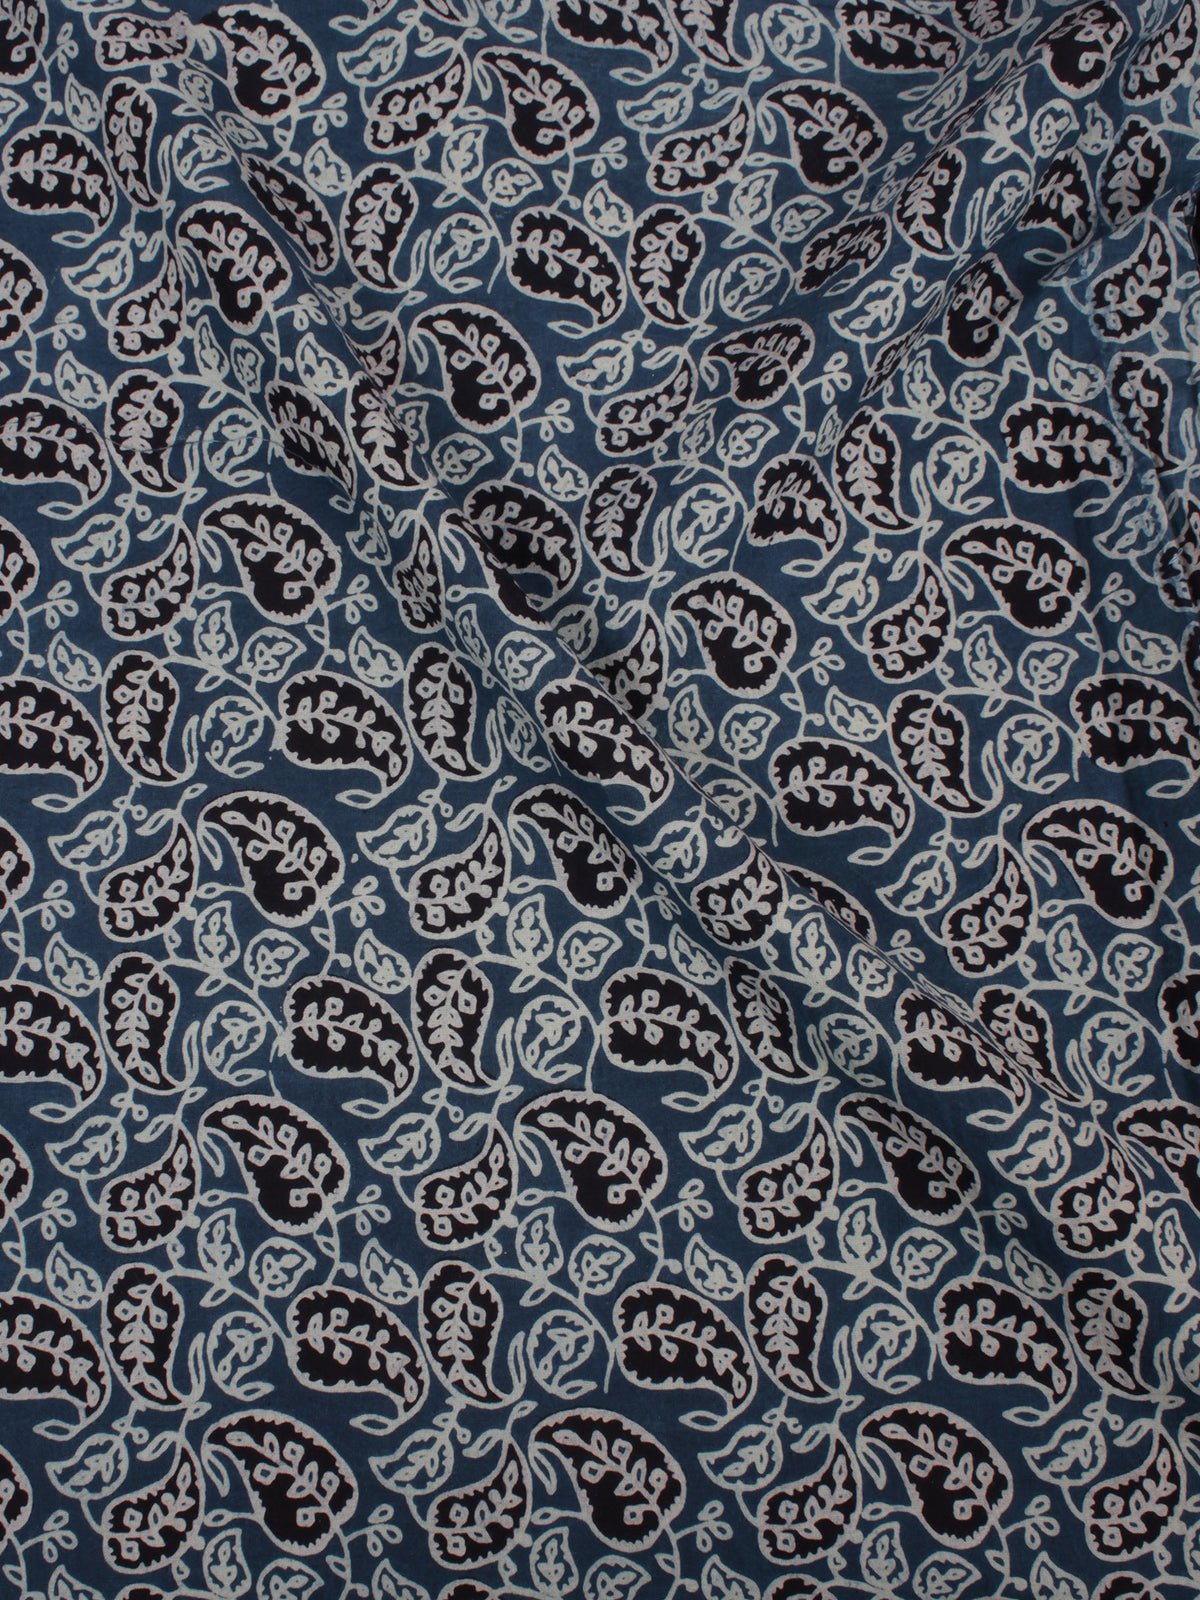 Blue Ivory Black Ajrakh Block Printed Cotton Fabric Per Meter - F0916676